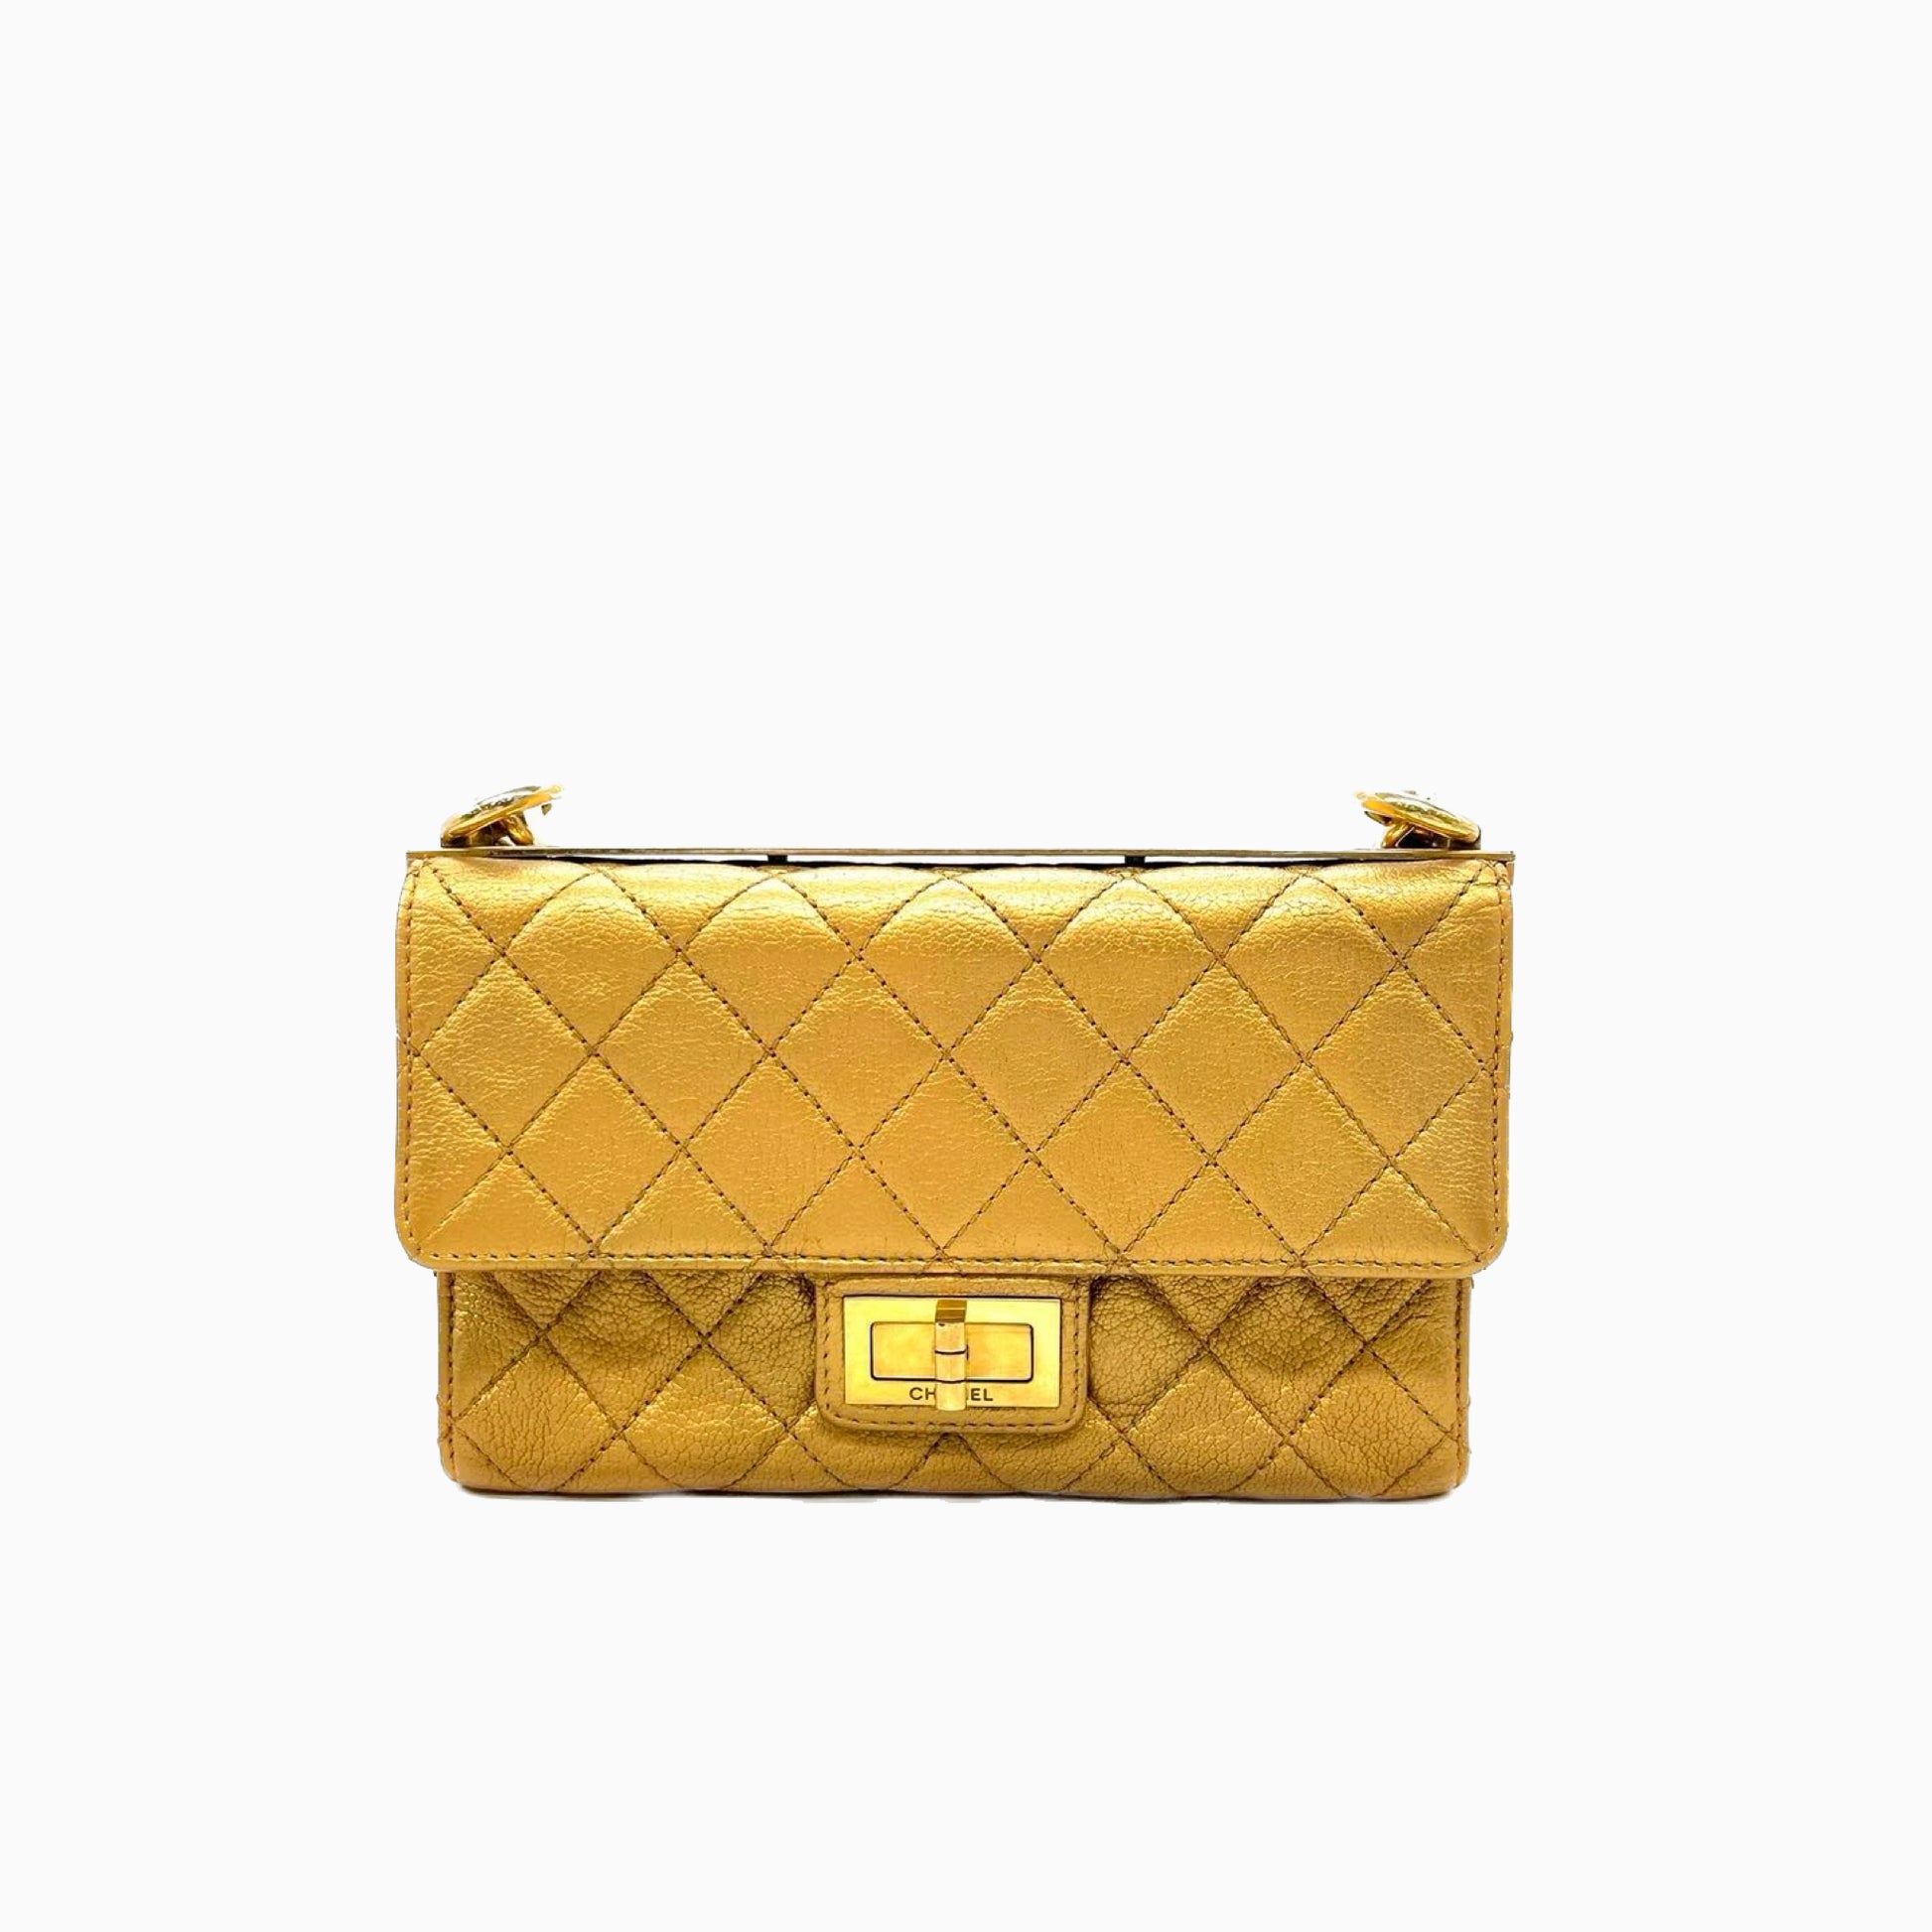 Sold at Auction: Chanel 2.55 Reissue 227 Double Flap Shoulder Bag